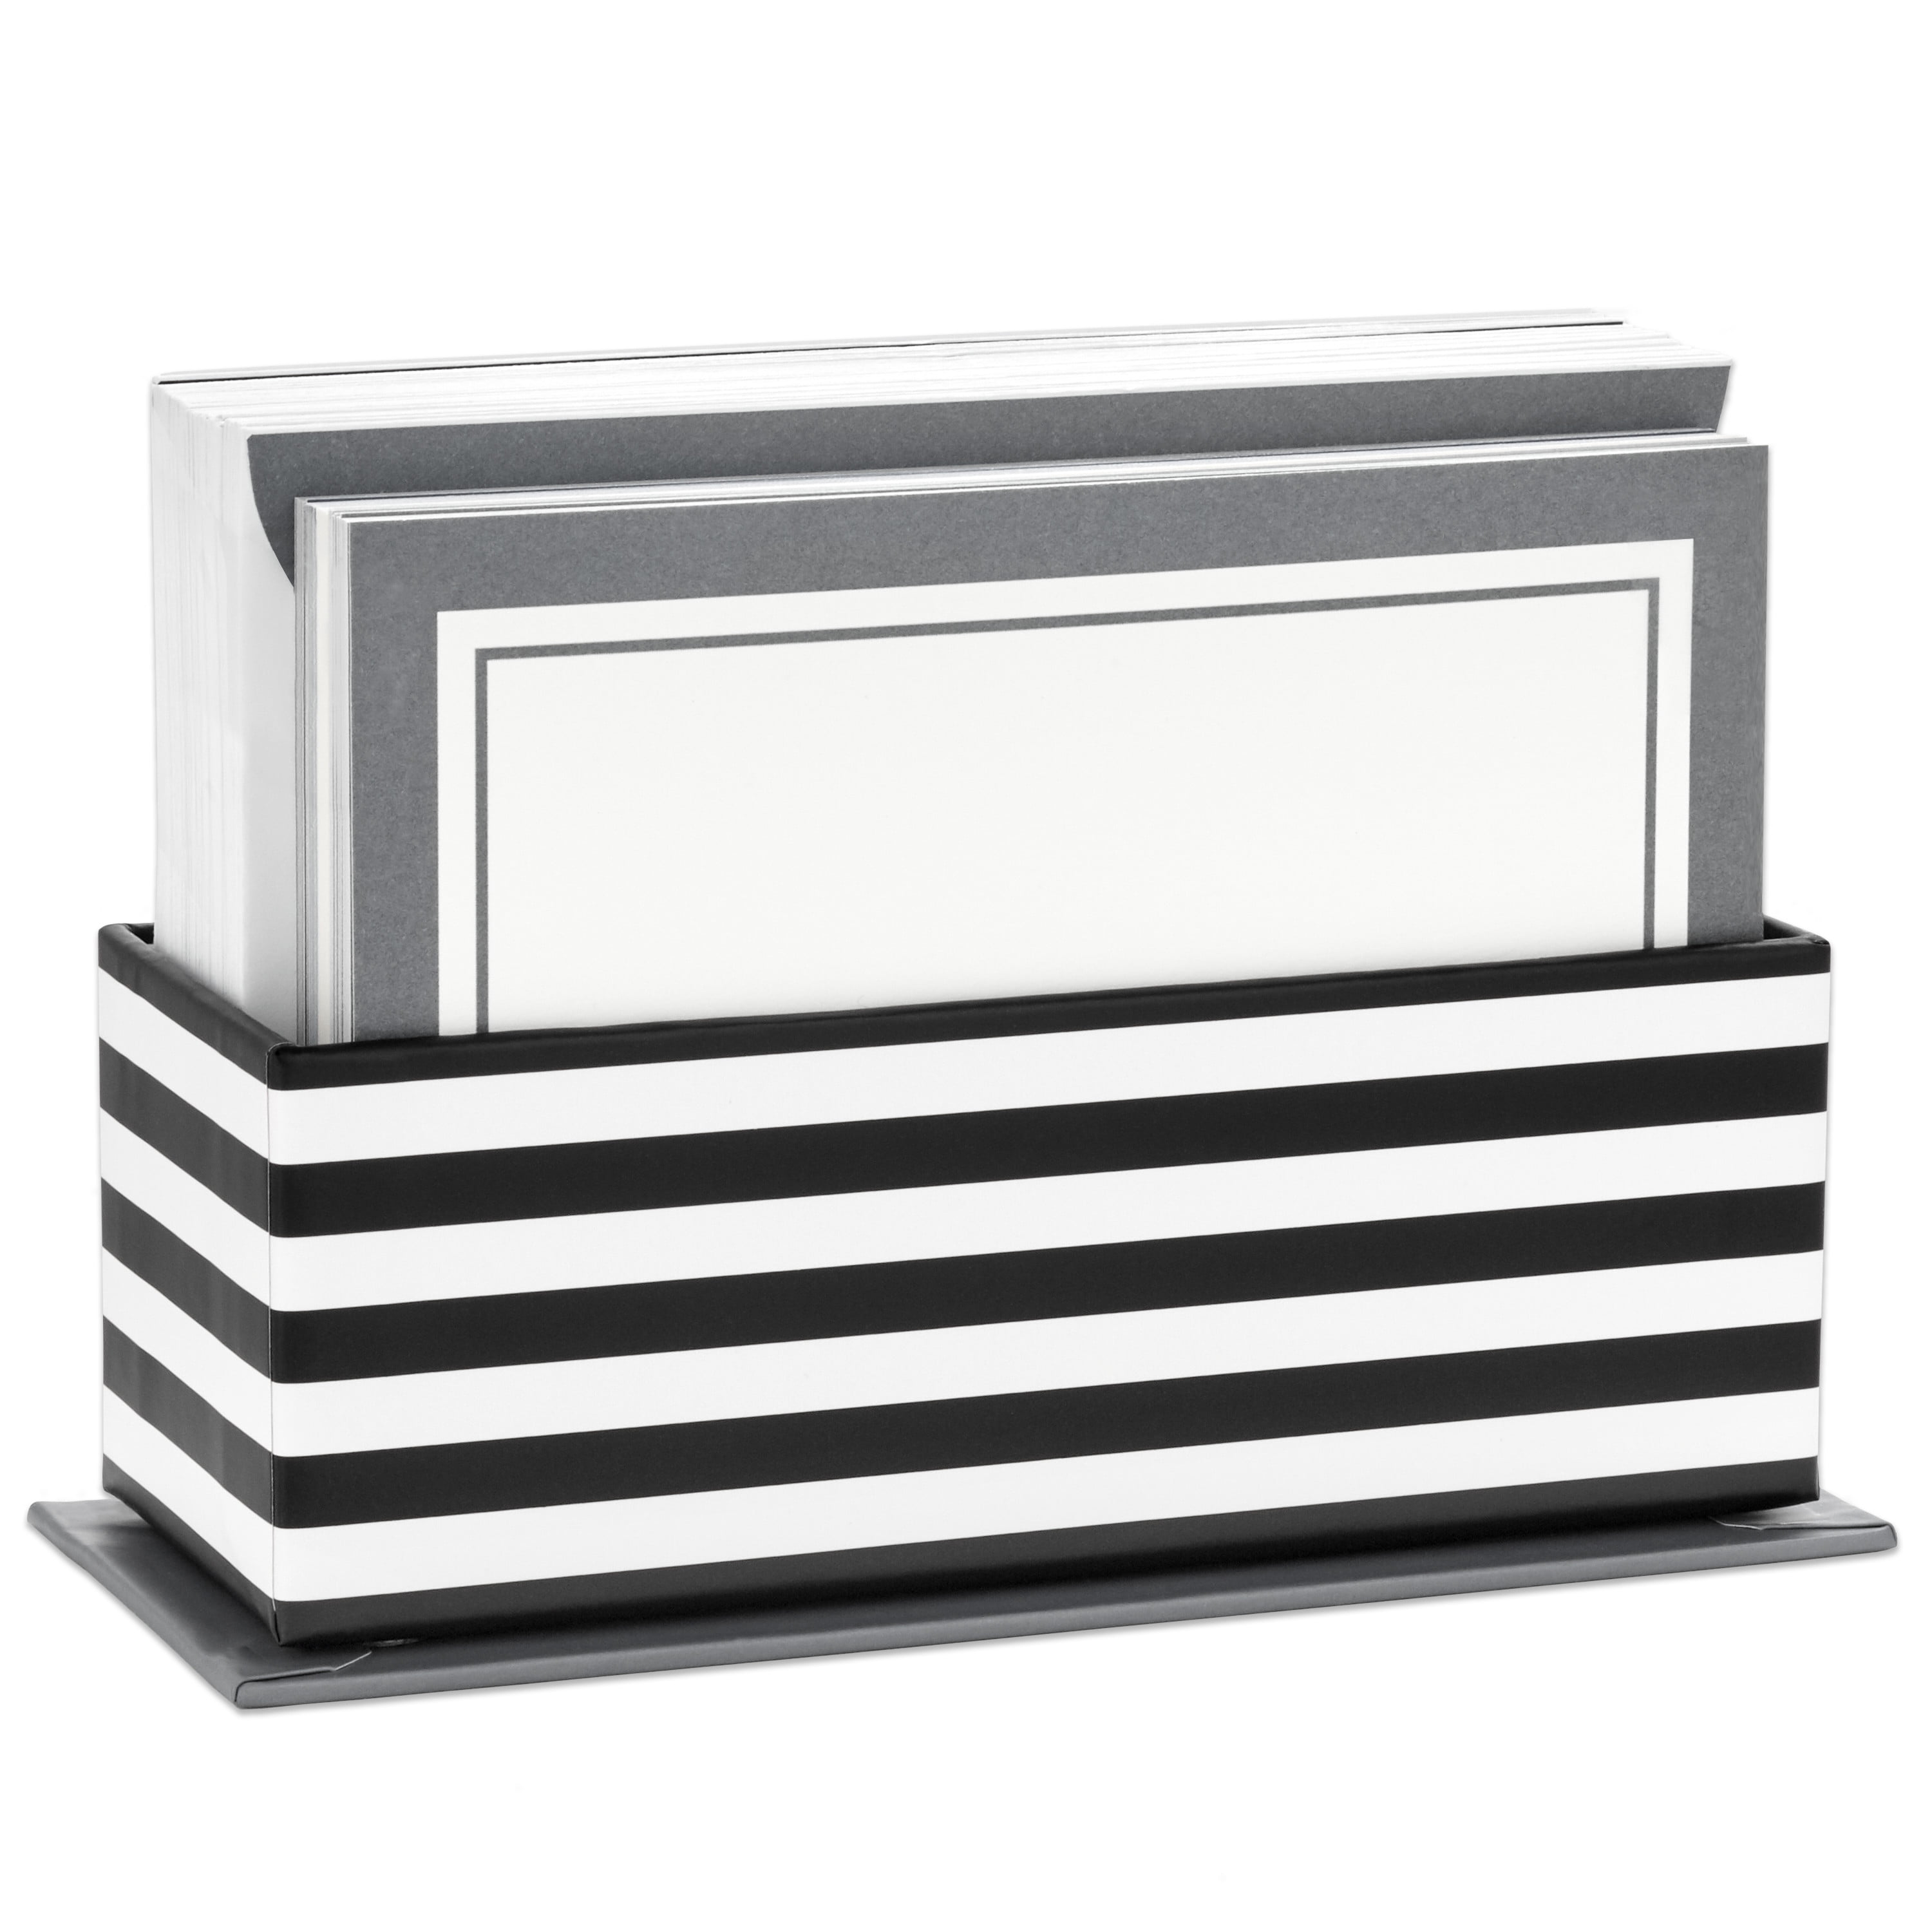 Dots & Stripes 4-H Blank Note Card Set – Shop 4-H